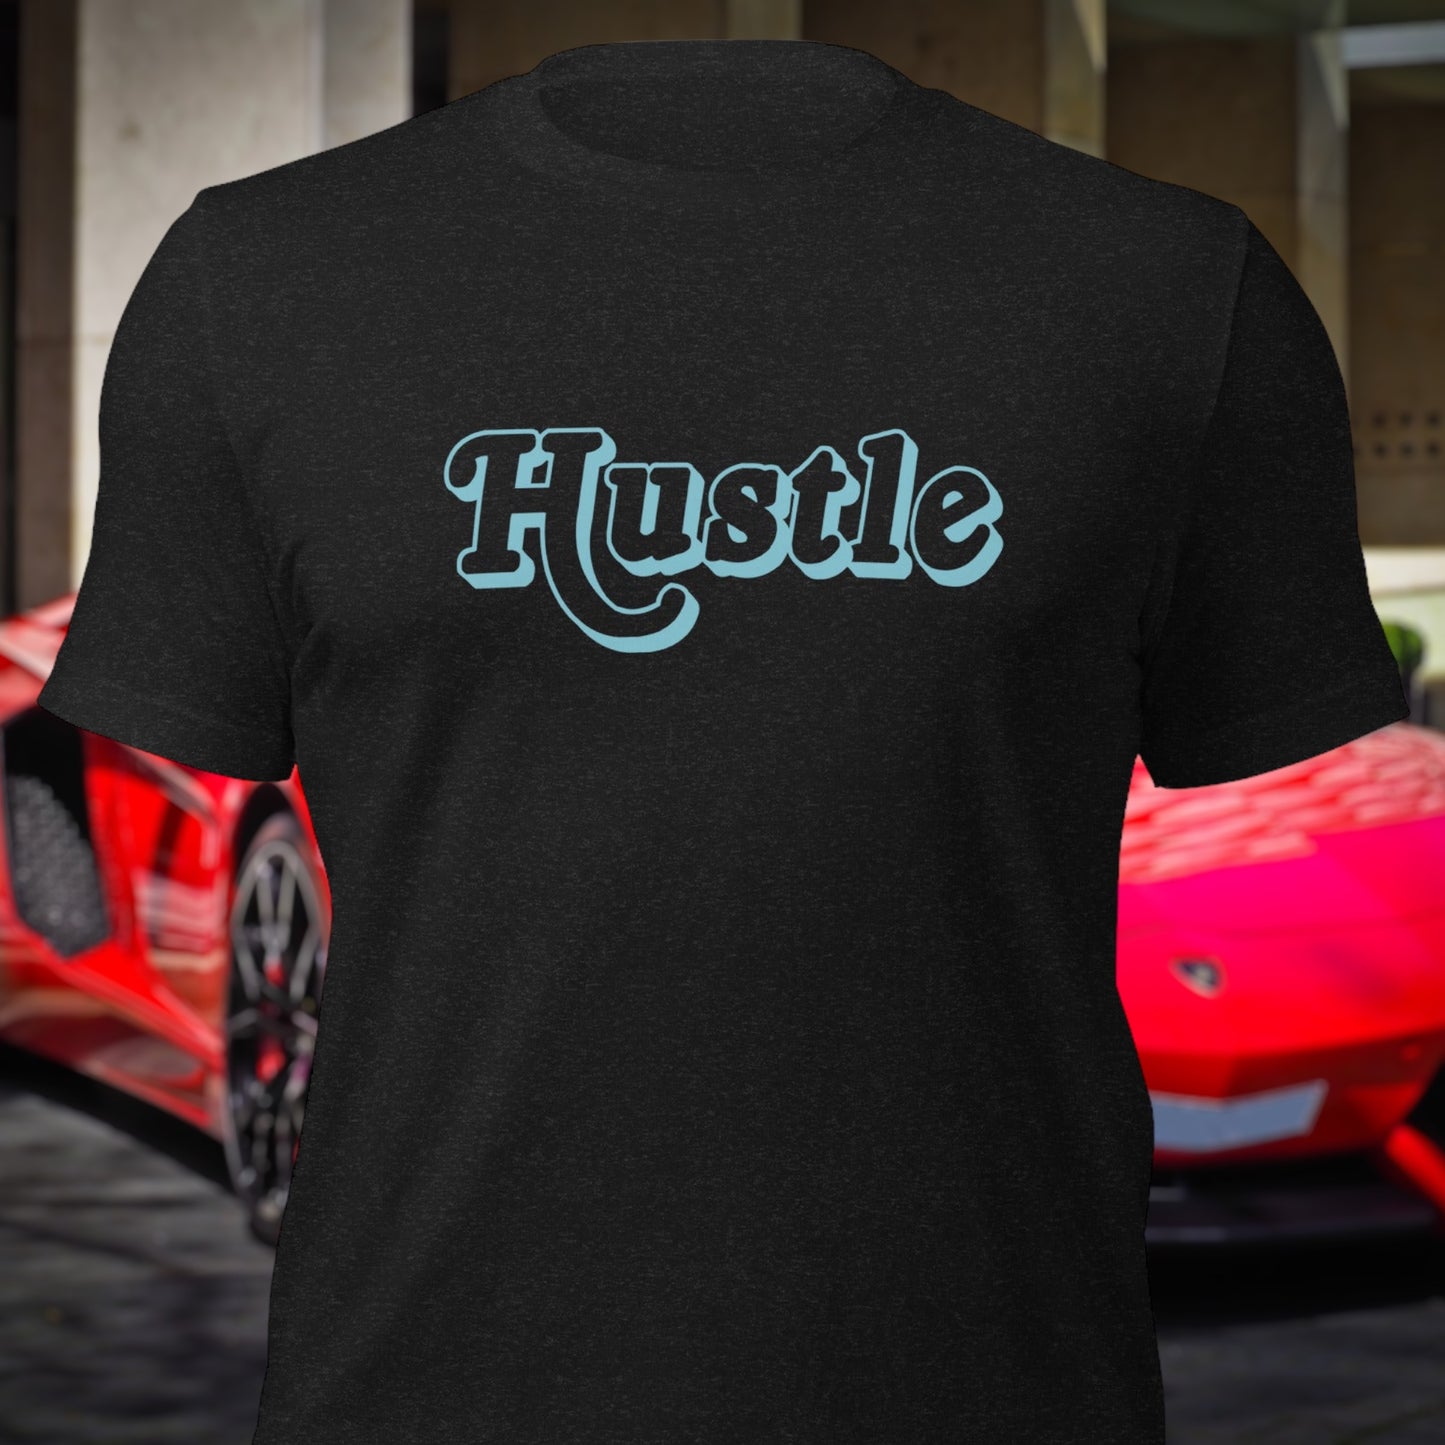 "Hustle" Entrepreneur T-Shirt - Weave Got Gifts - Unique Gifts You Won’t Find Anywhere Else!